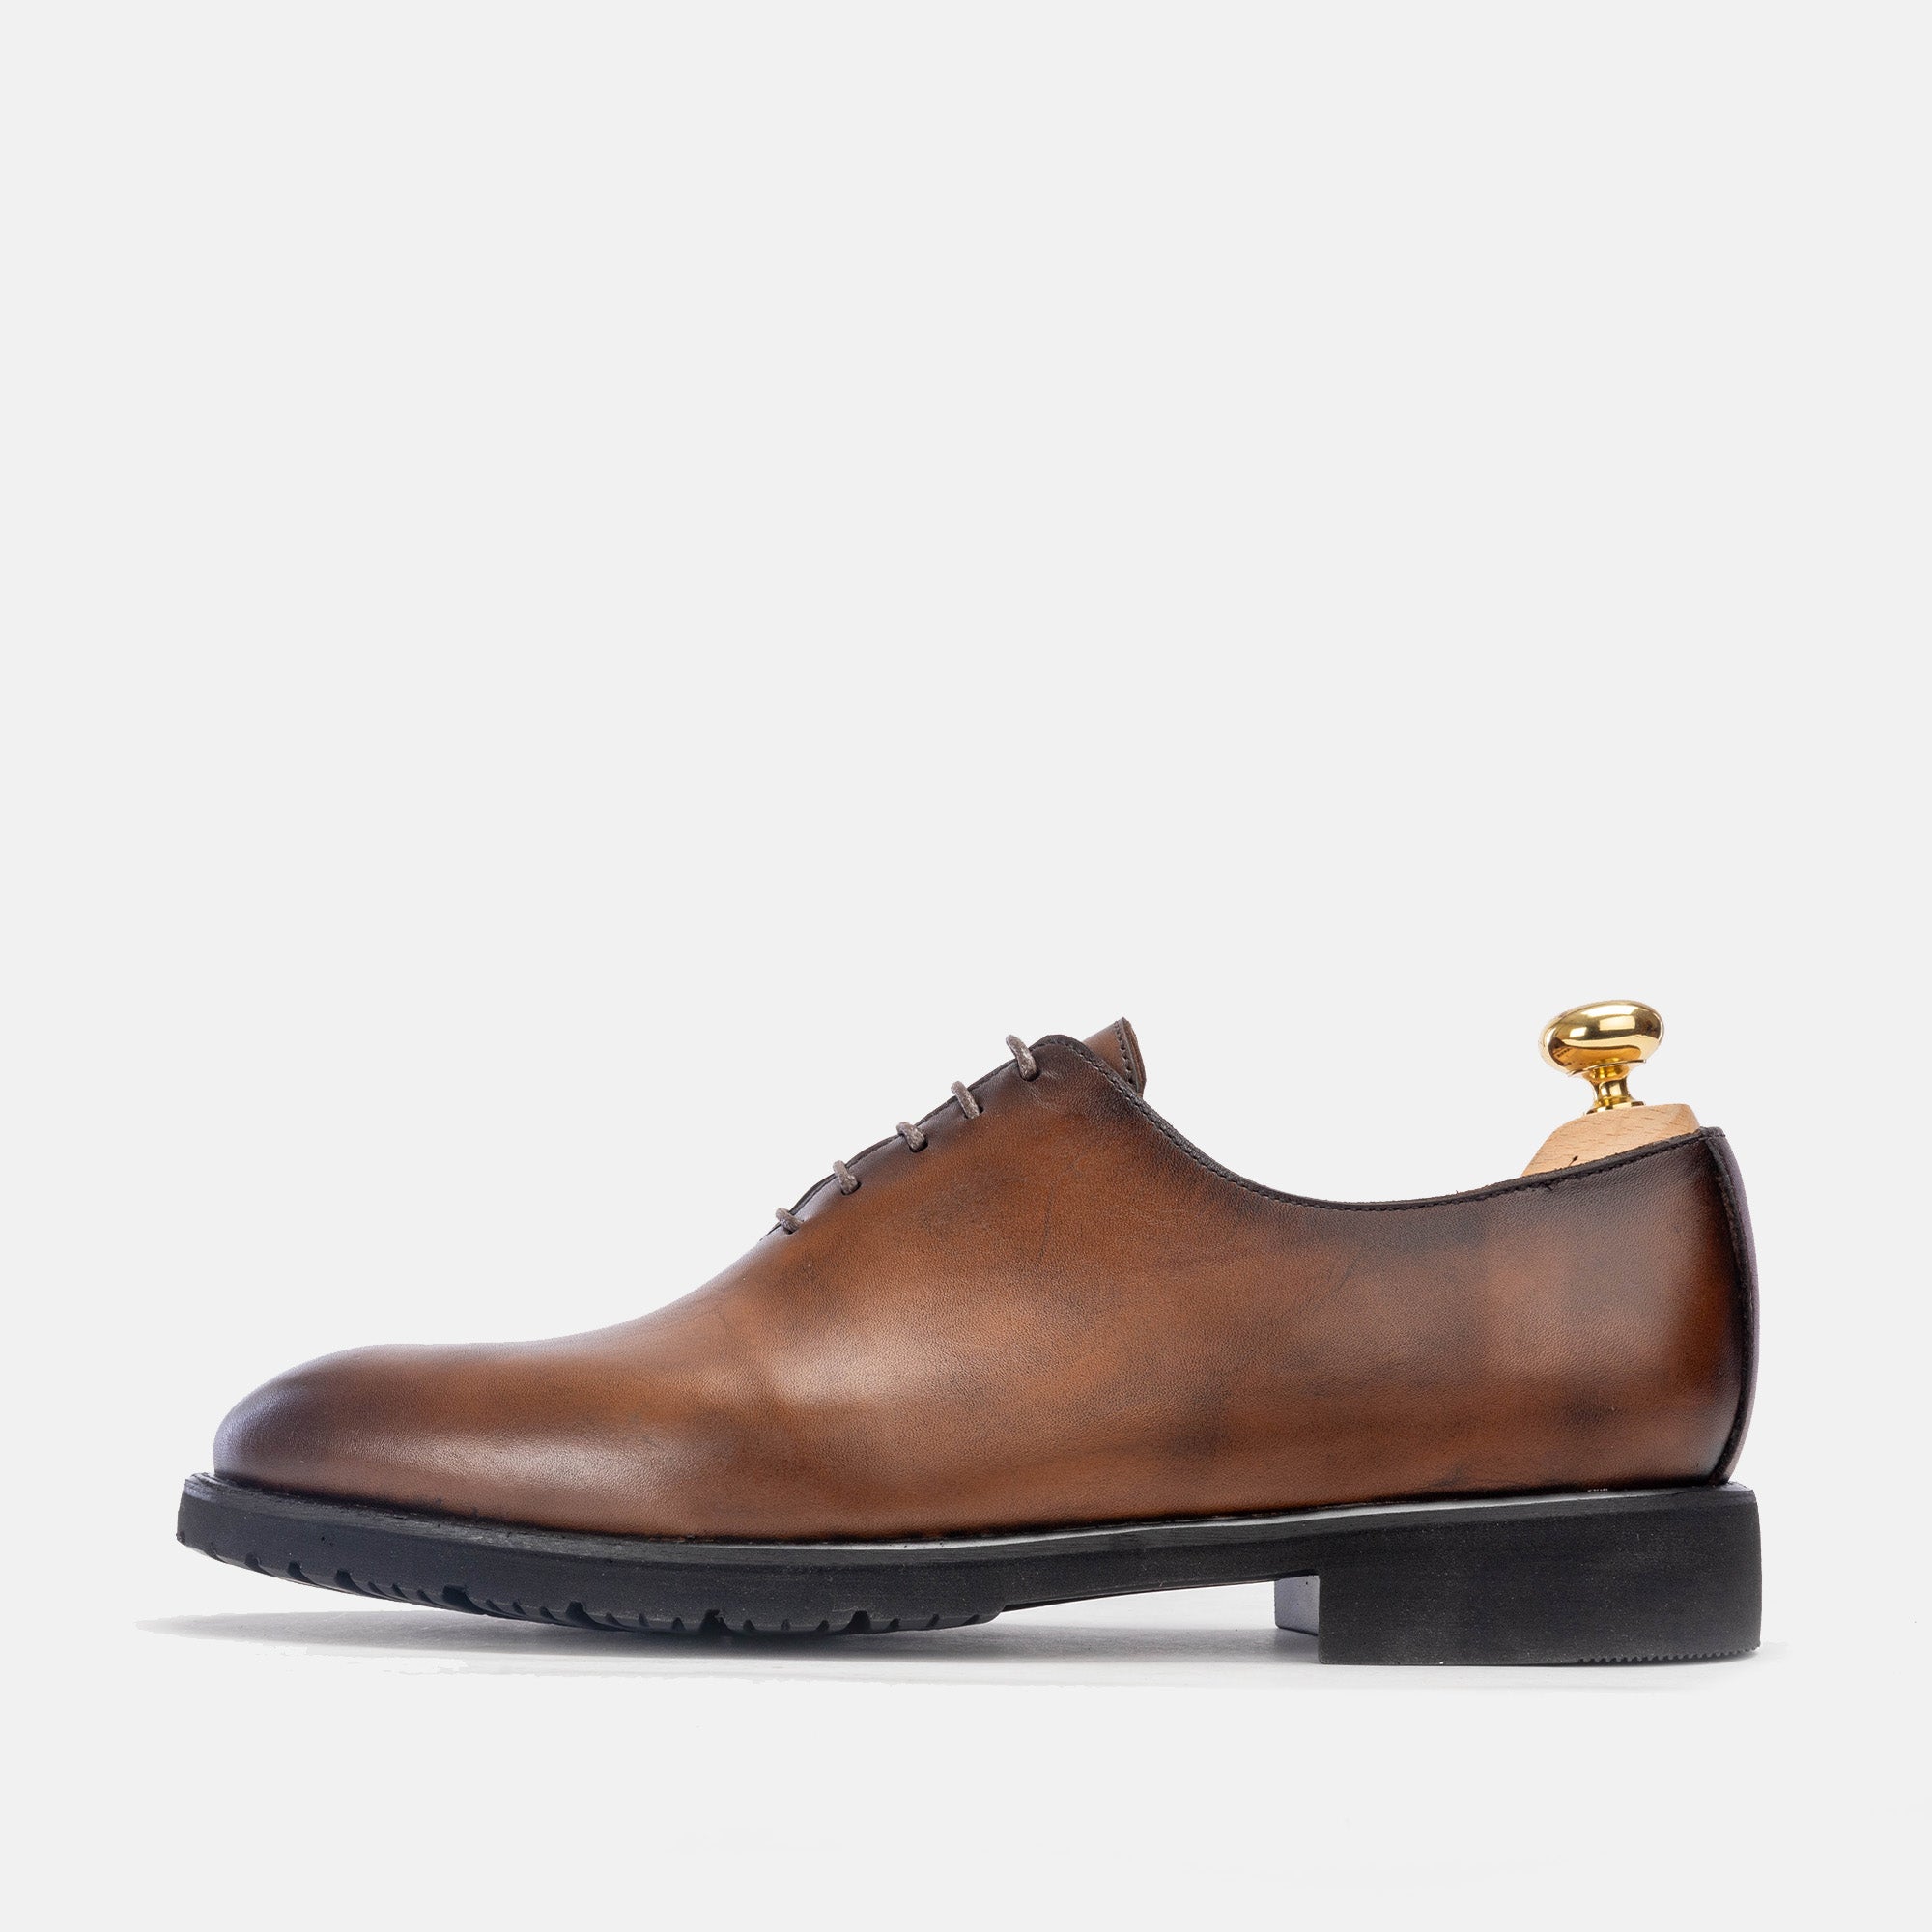 '''5161 chaussure cuir marron vintage